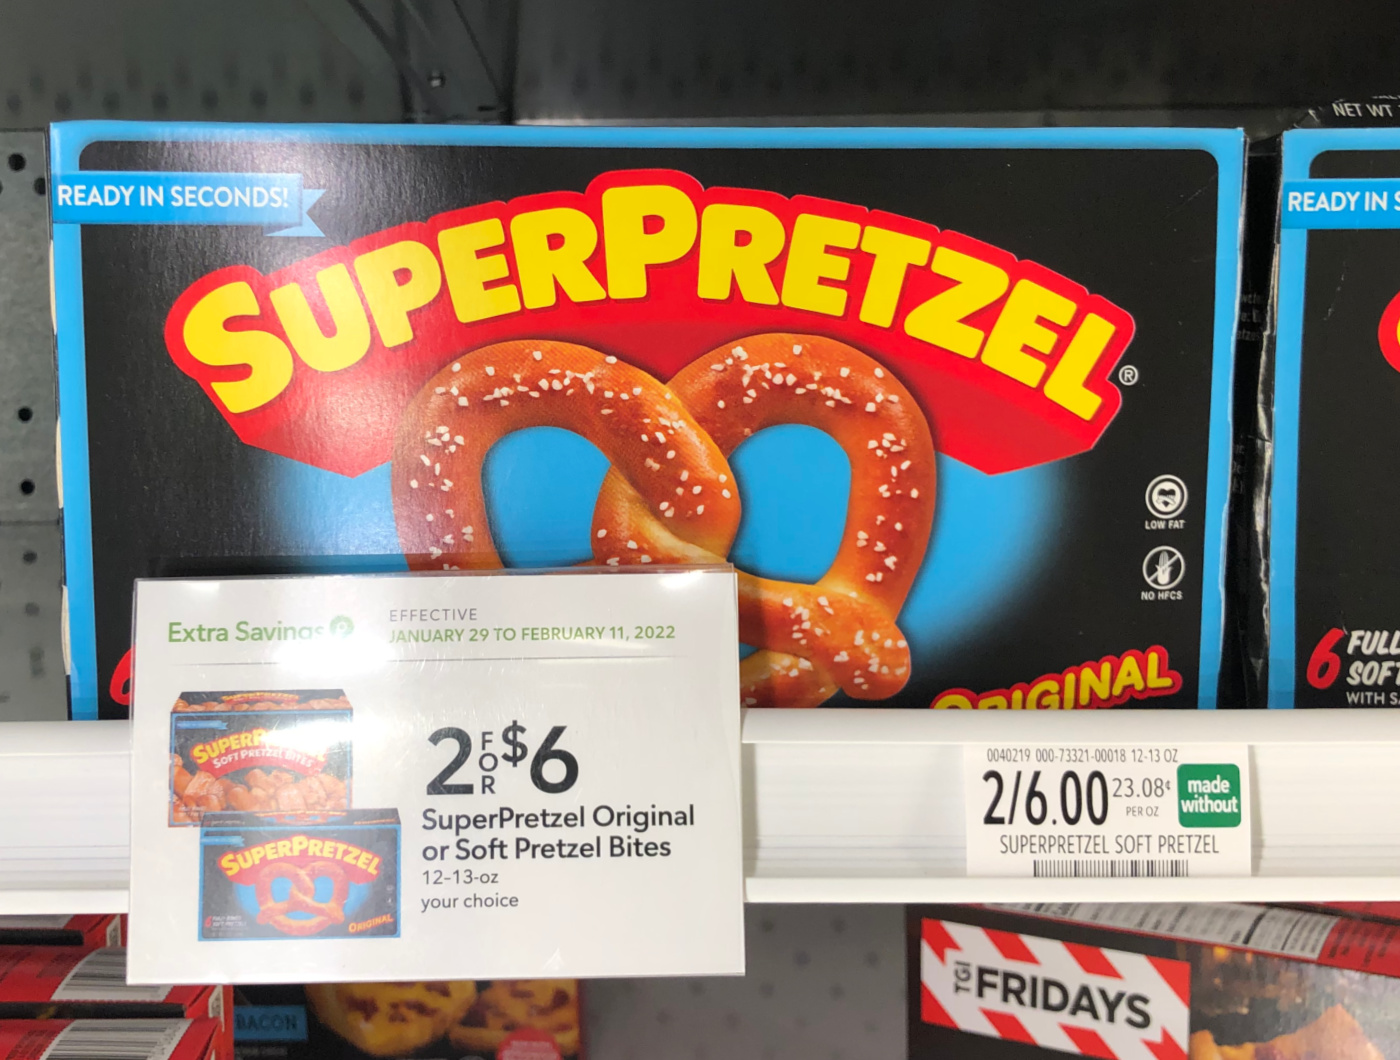 SuperPretzel Soft Pretzels As Low As $1.50 At Publix on I Heart Publix